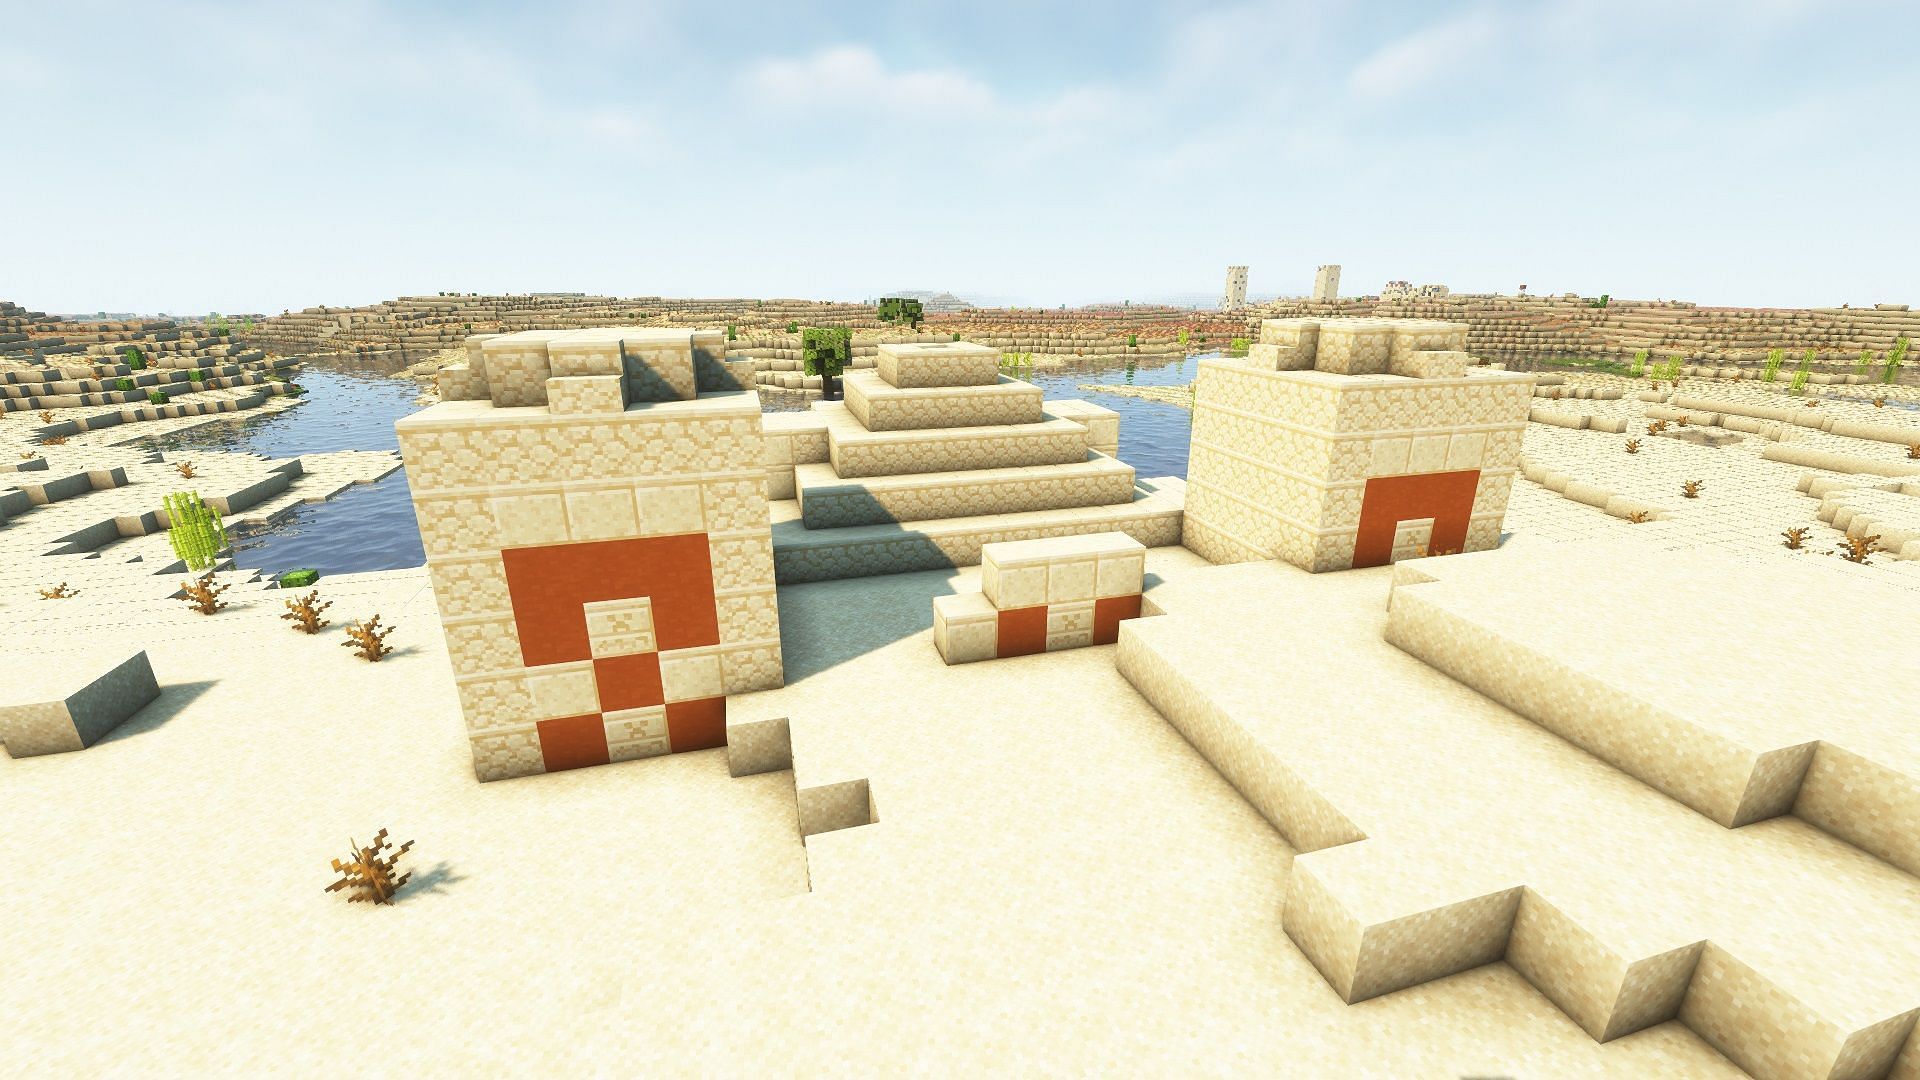 A desert pyramid in Minecraft (Image via Mojang)